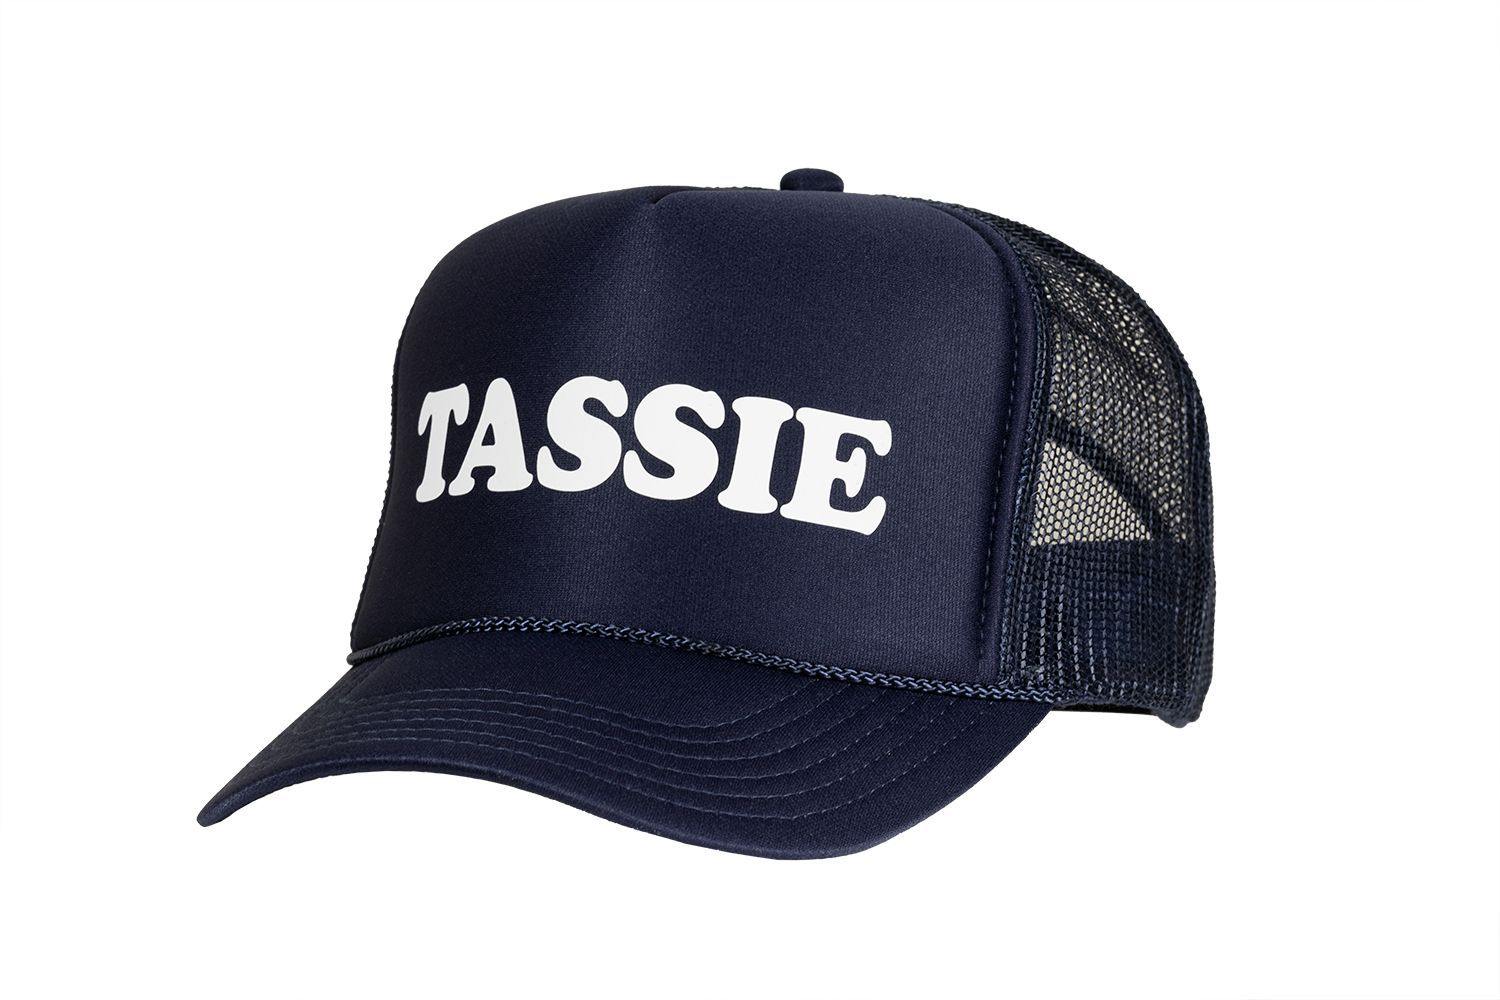 Tasmania high crown trucker cap with mesh back and snapback - Tropic Trucker Australia®